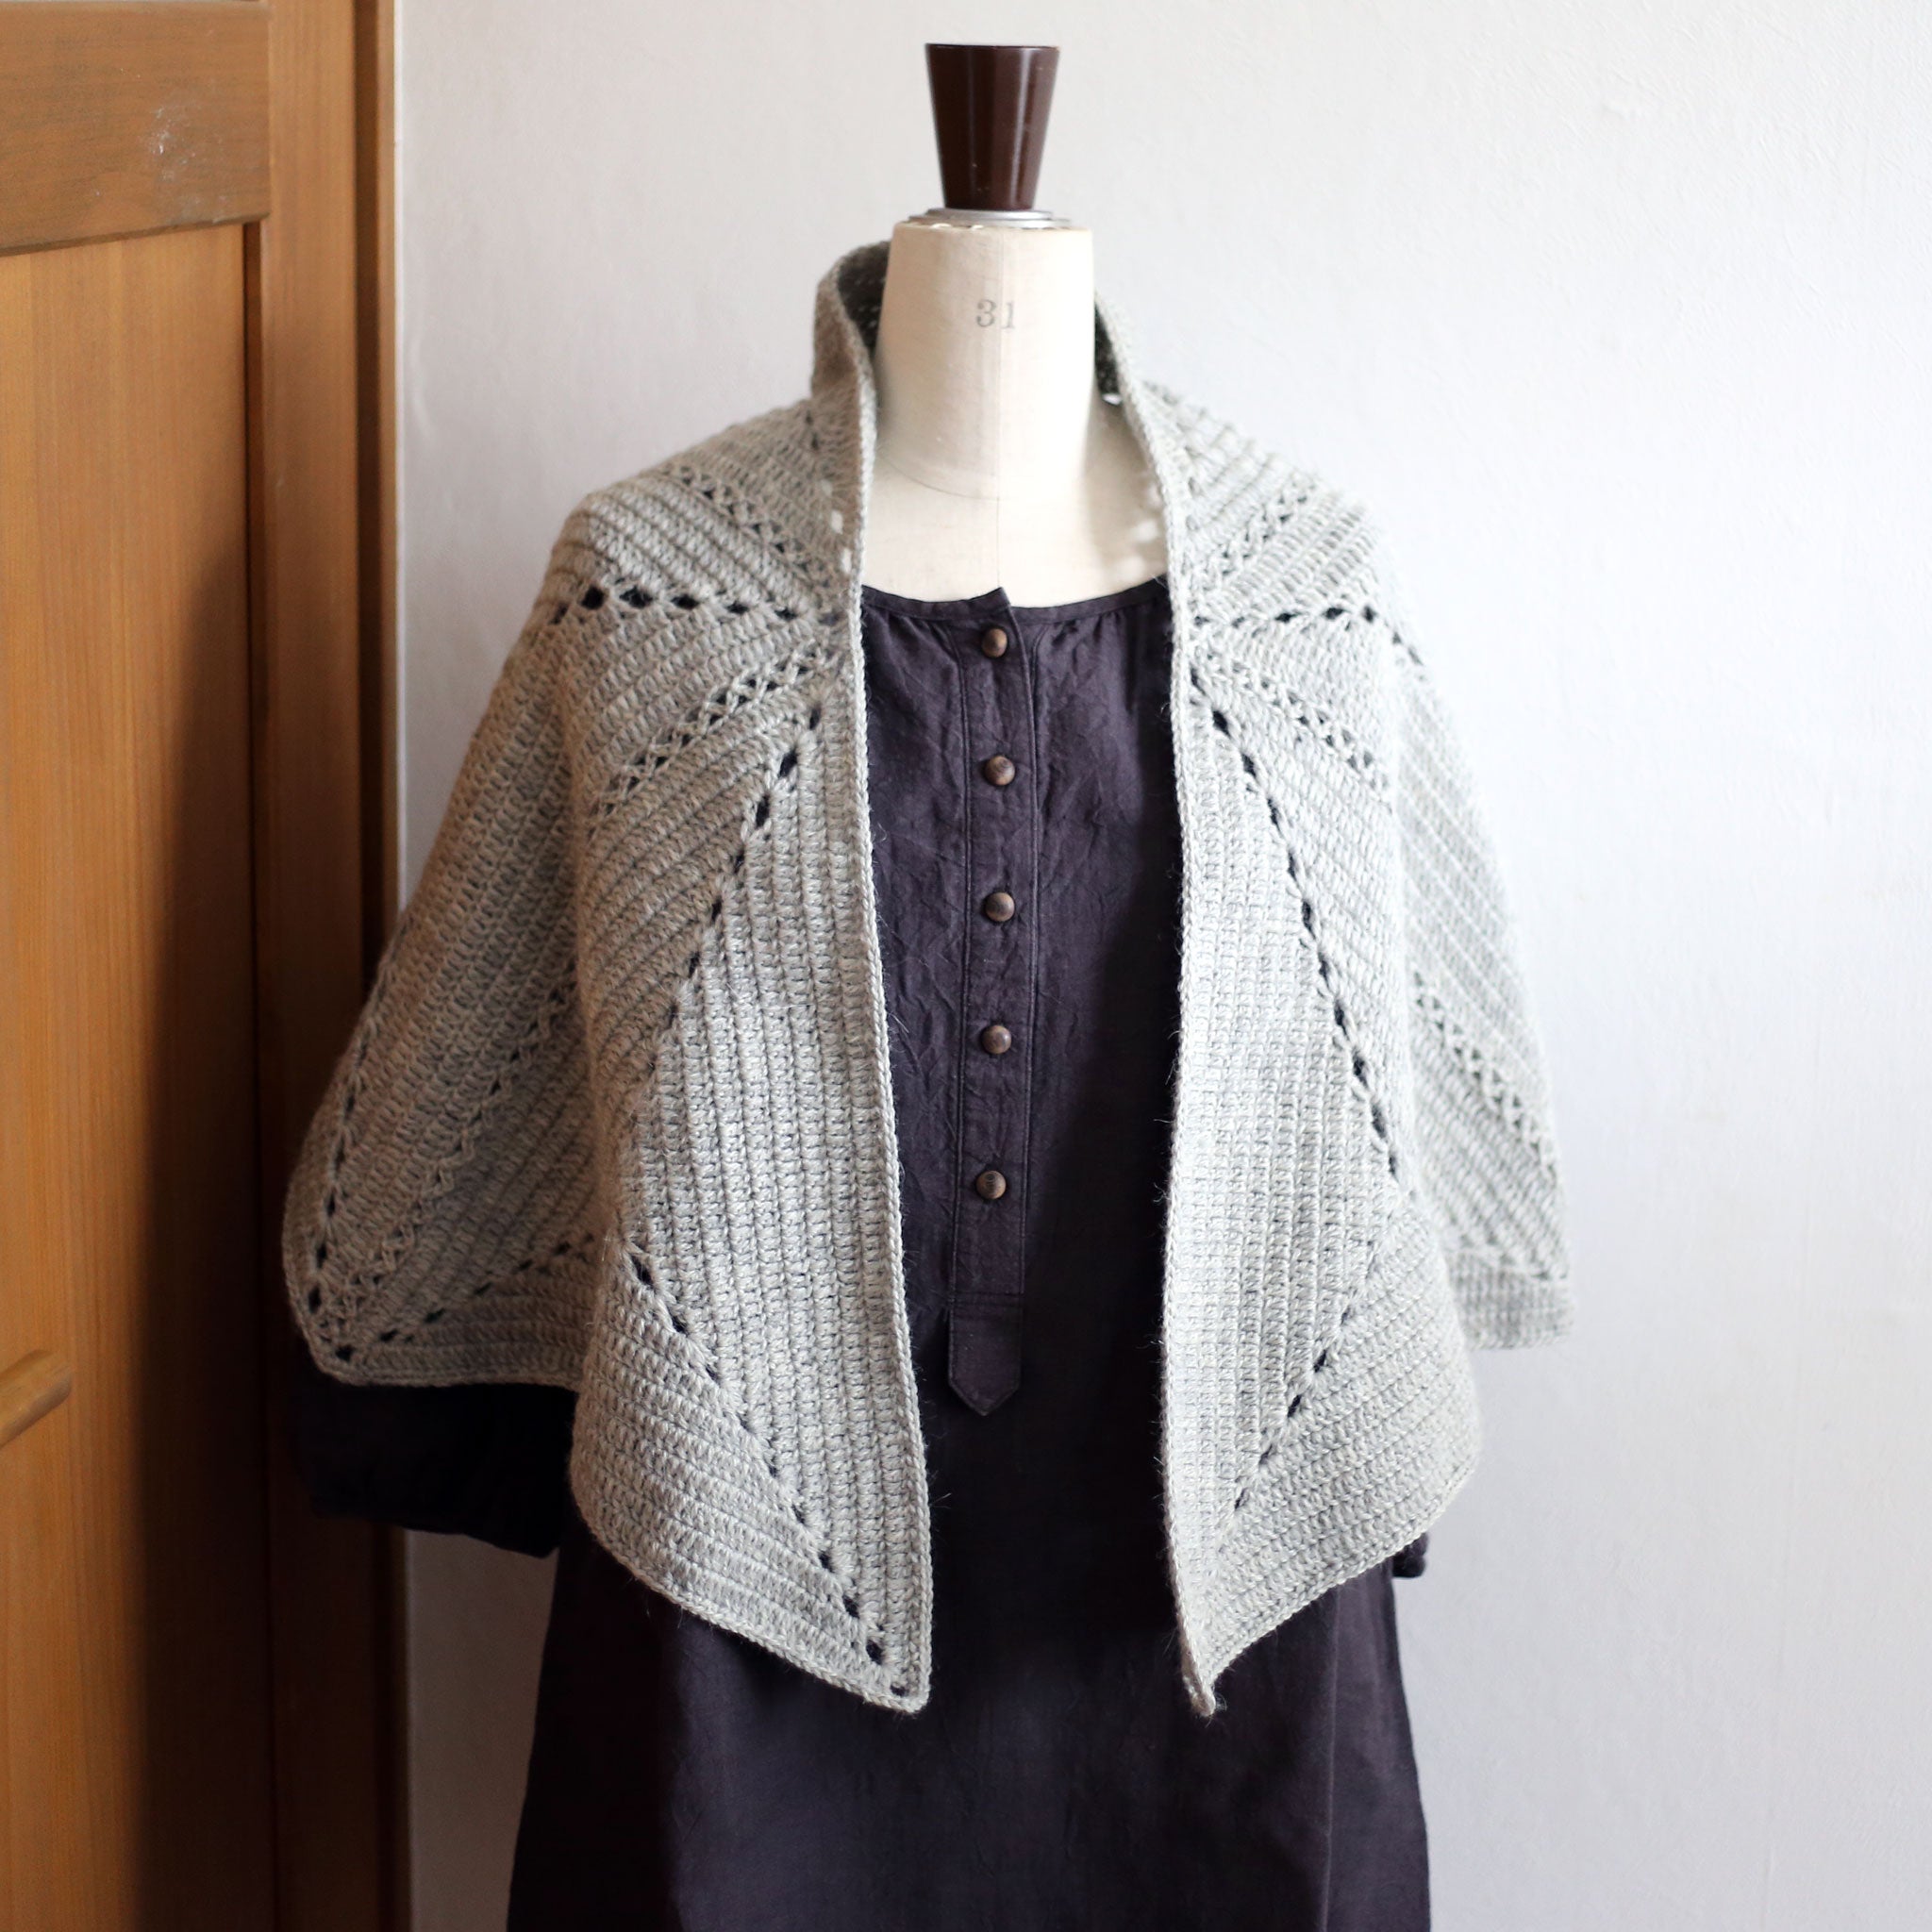 "Triangular panel stole" Crochet Pattern